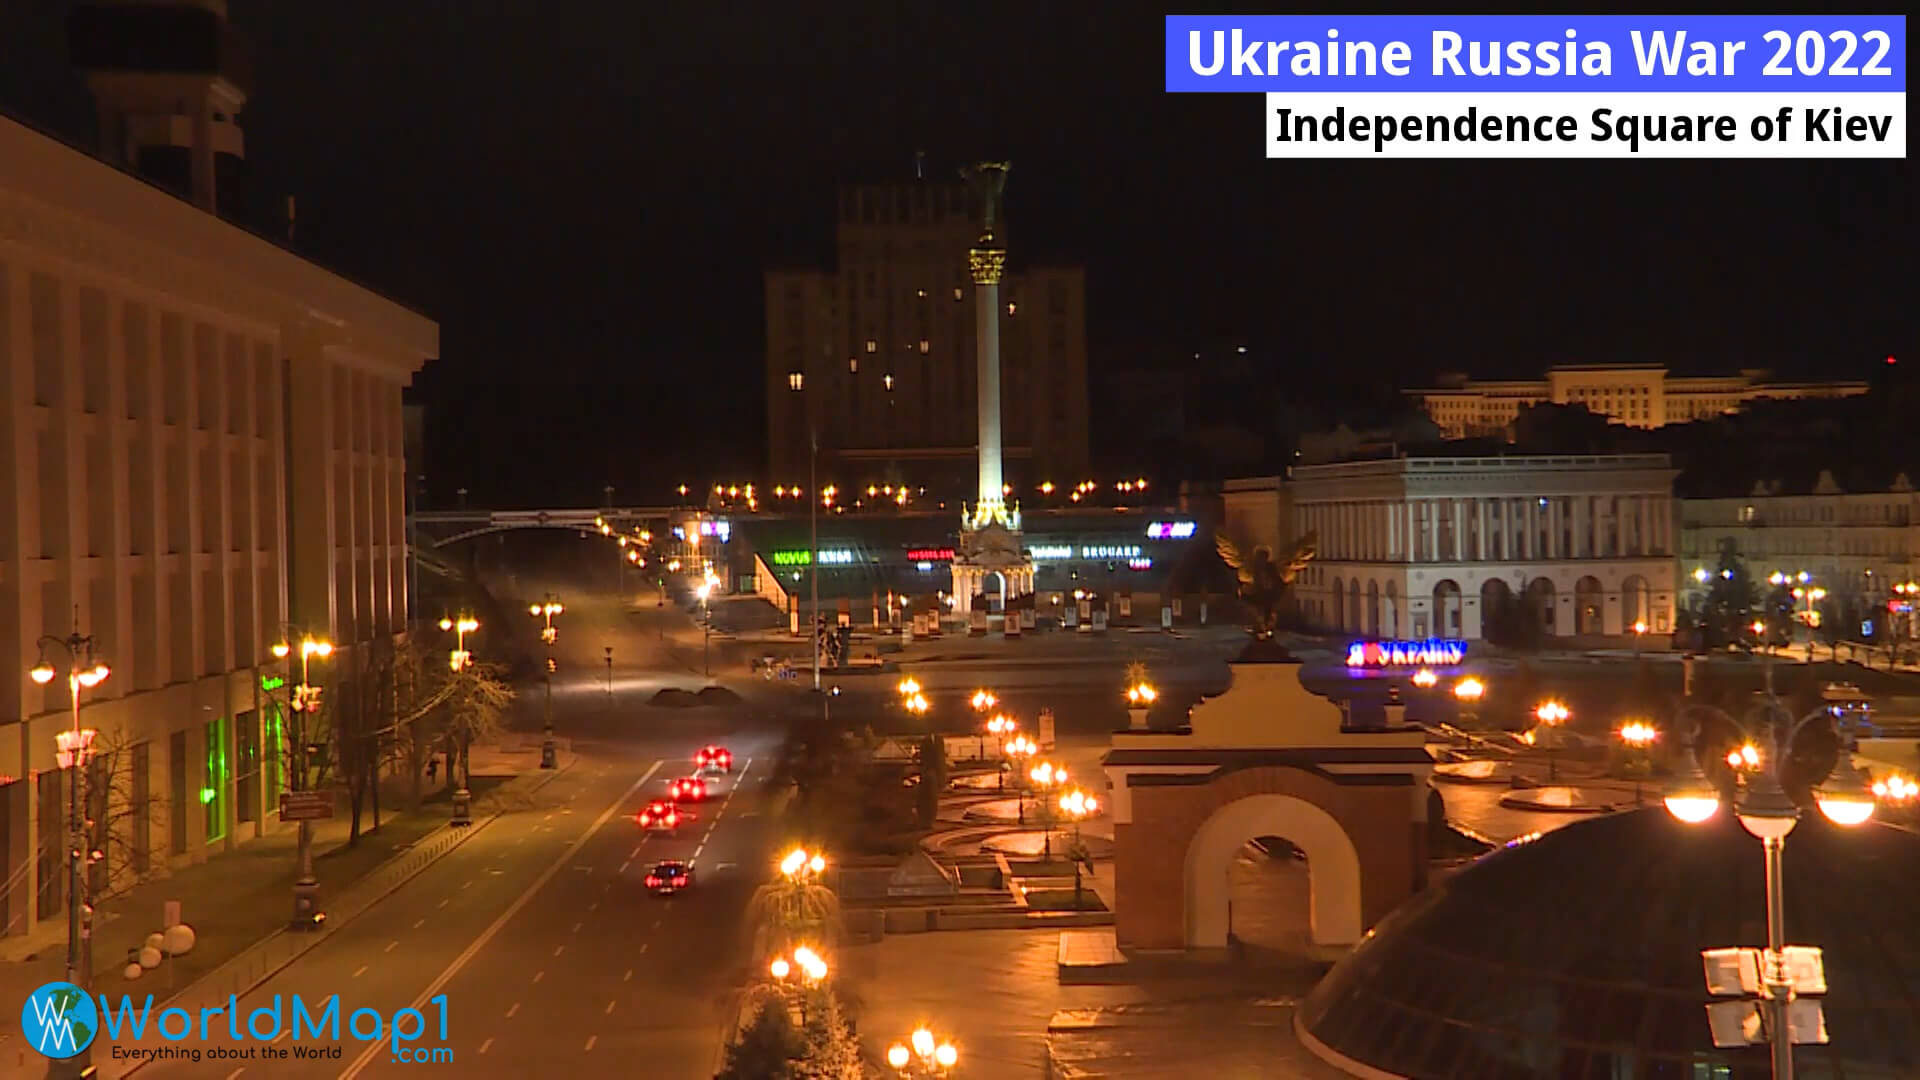 Ukraine Russia War 2022 Independence Square of Kiev